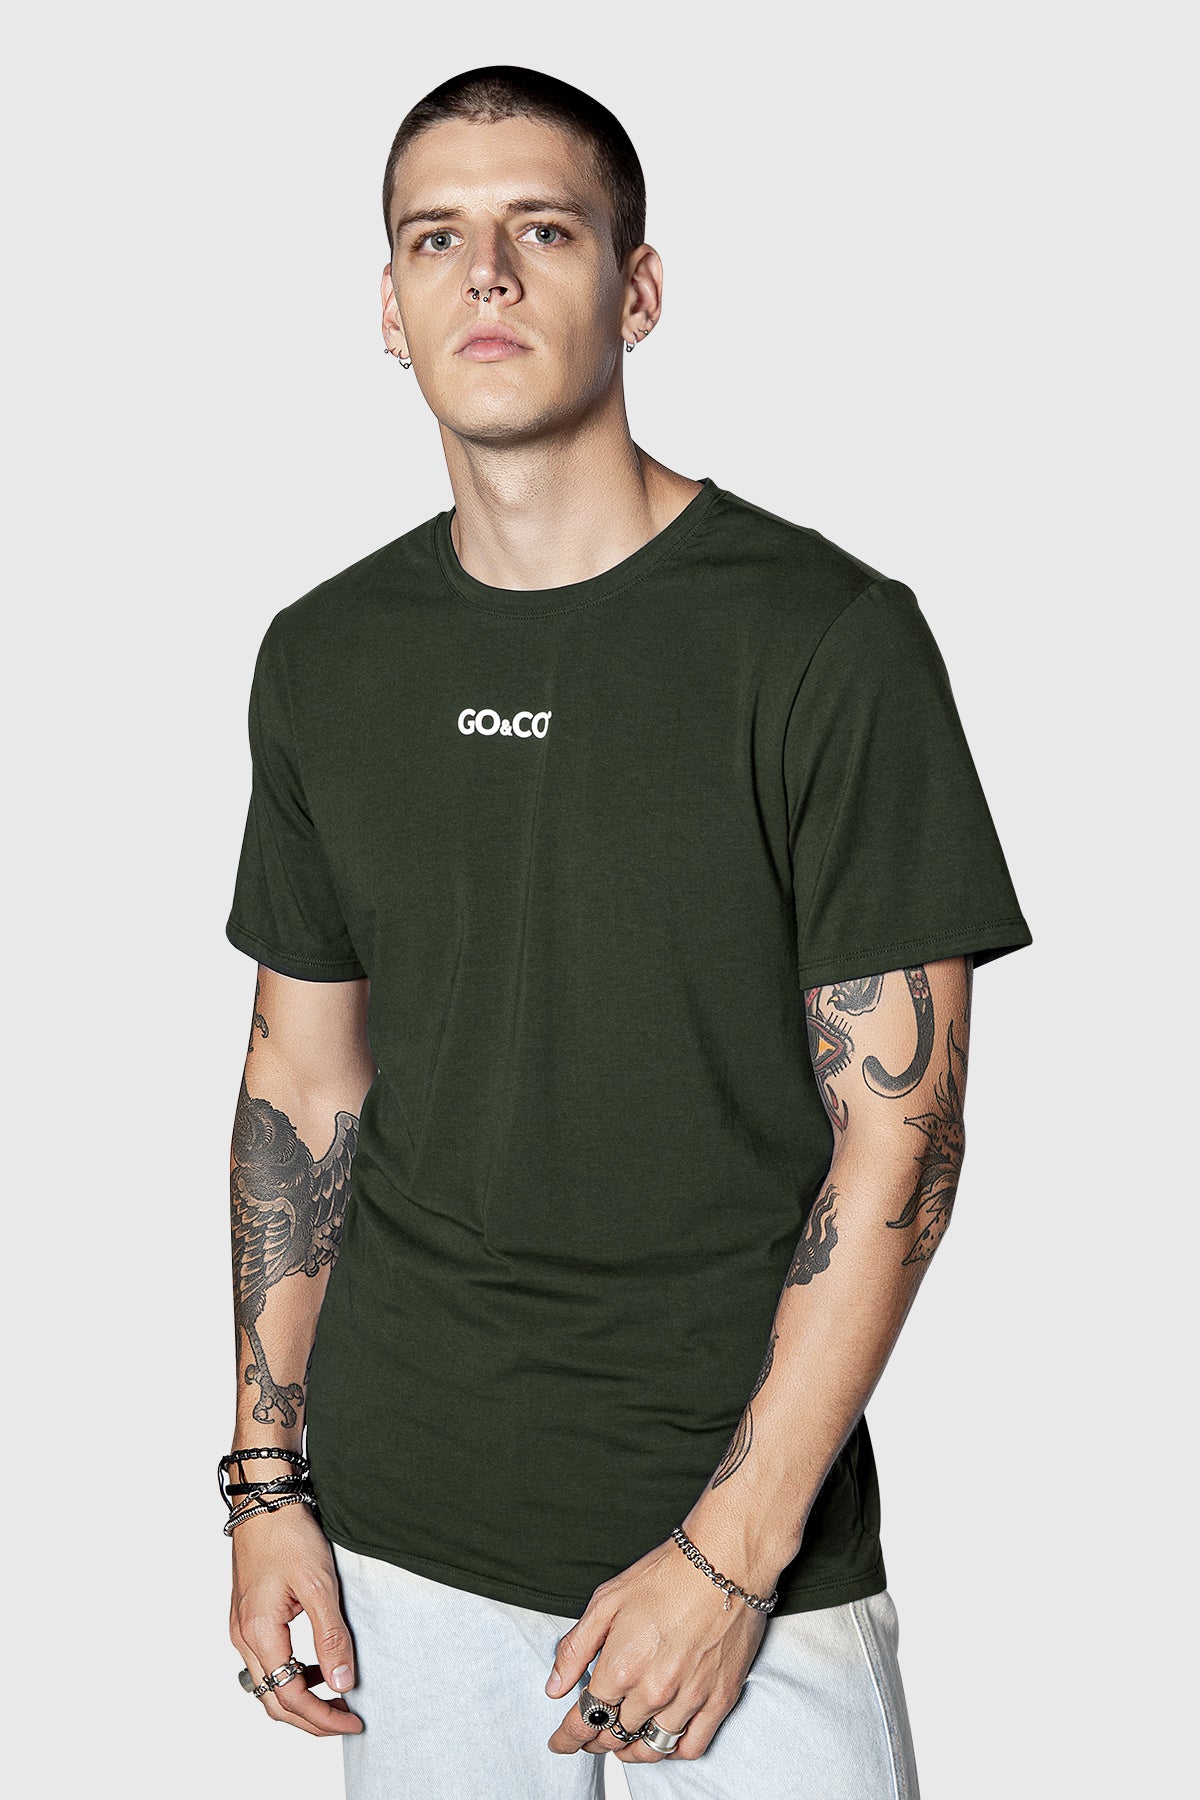 Camiseta GO&CO estampado verde militar